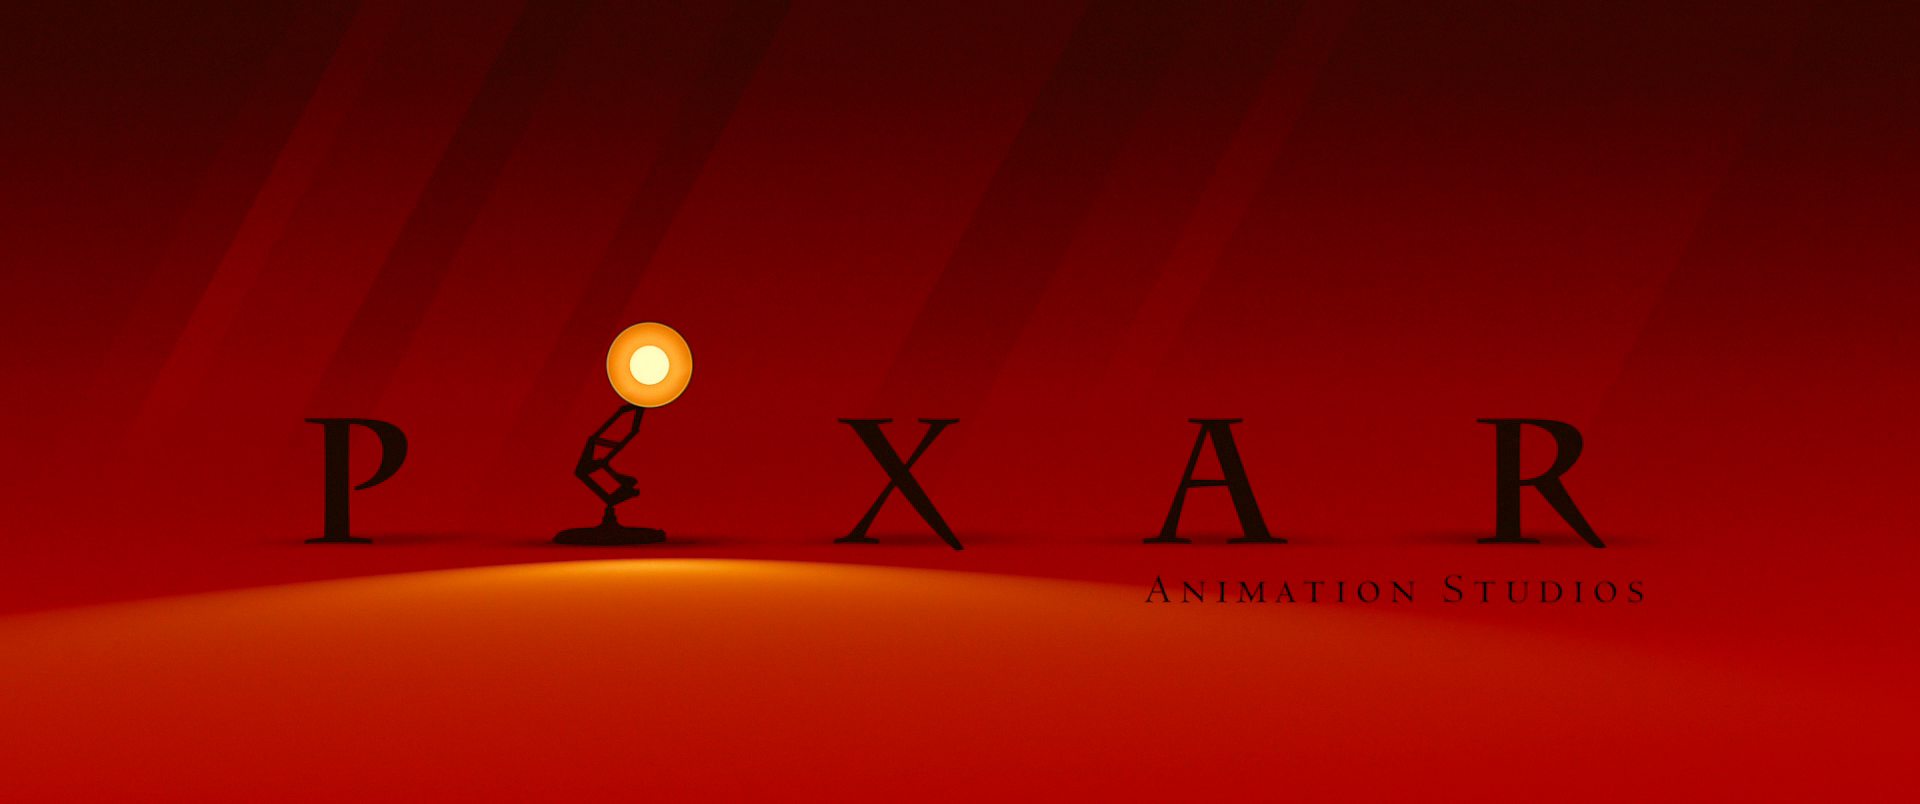 Pixar Logo Images